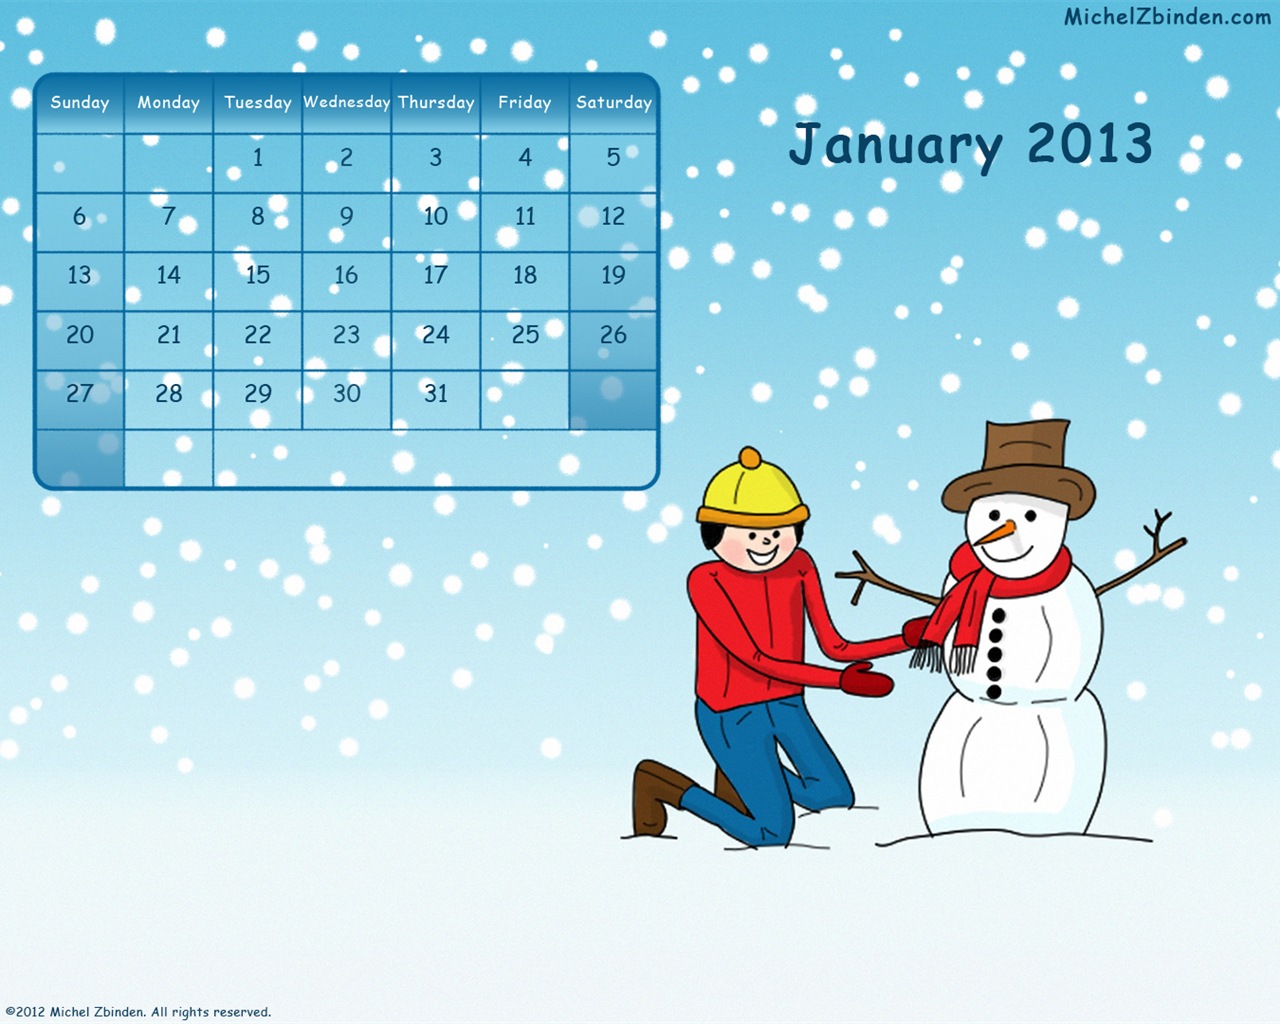 January 2013 Calendar wallpaper (1) #10 - 1280x1024